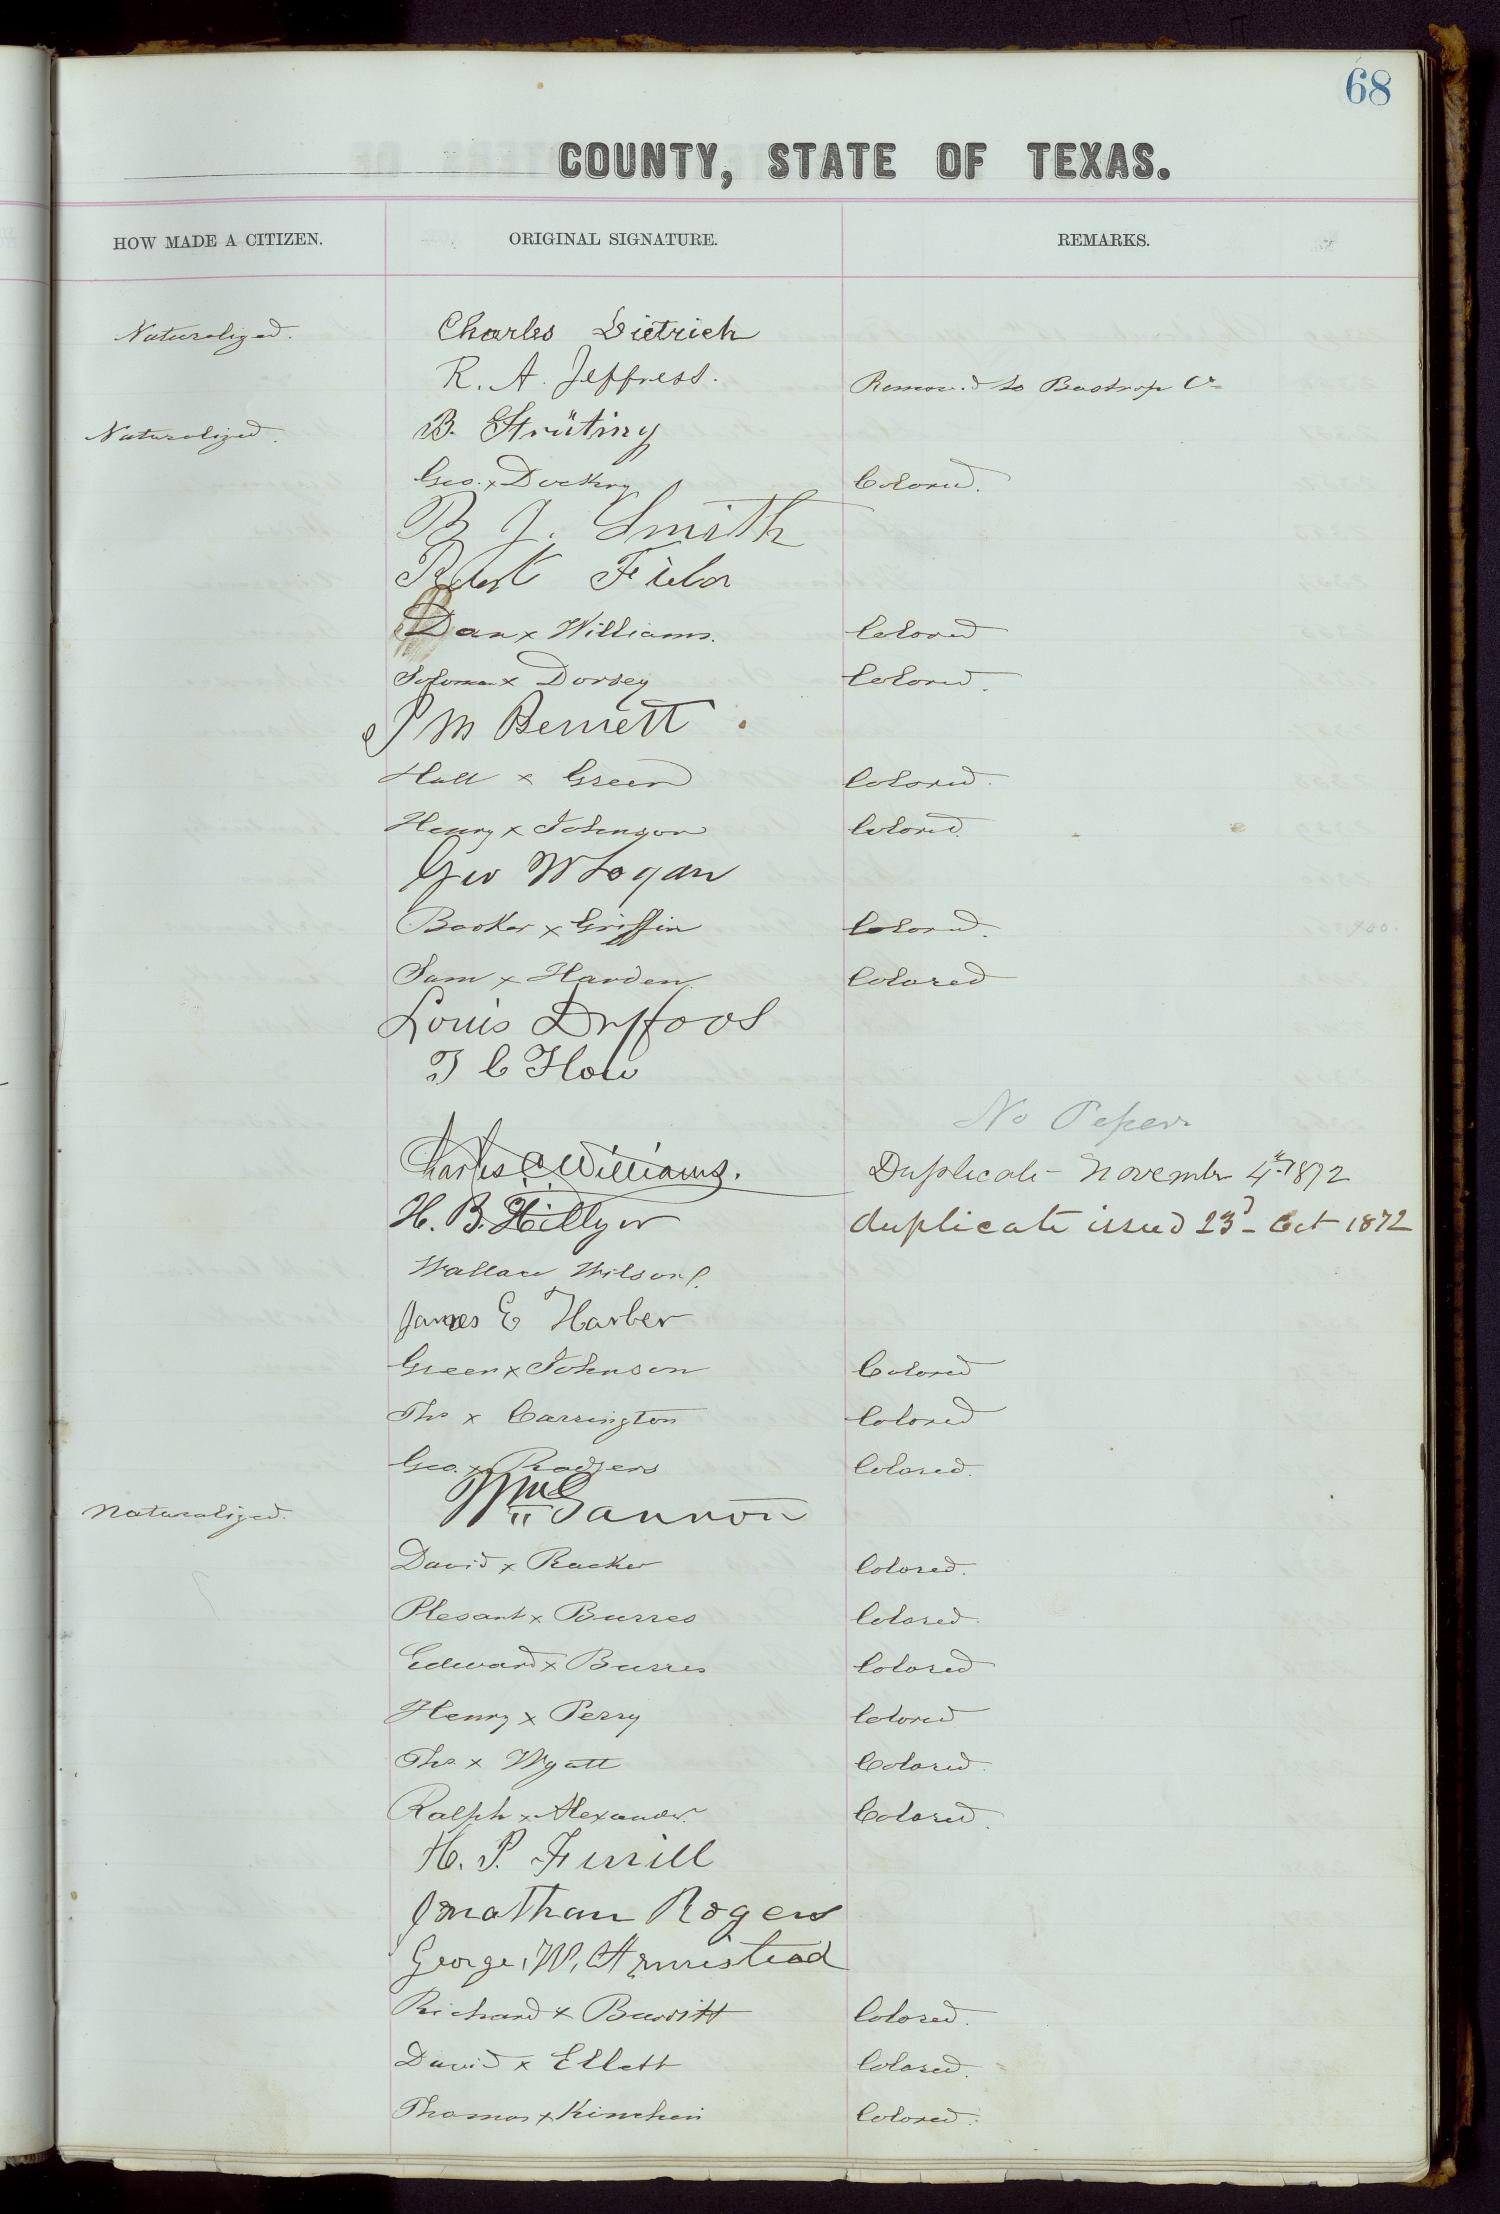 Travis County Election Records: Voter Registration List 1867
                                                
                                                    68
                                                